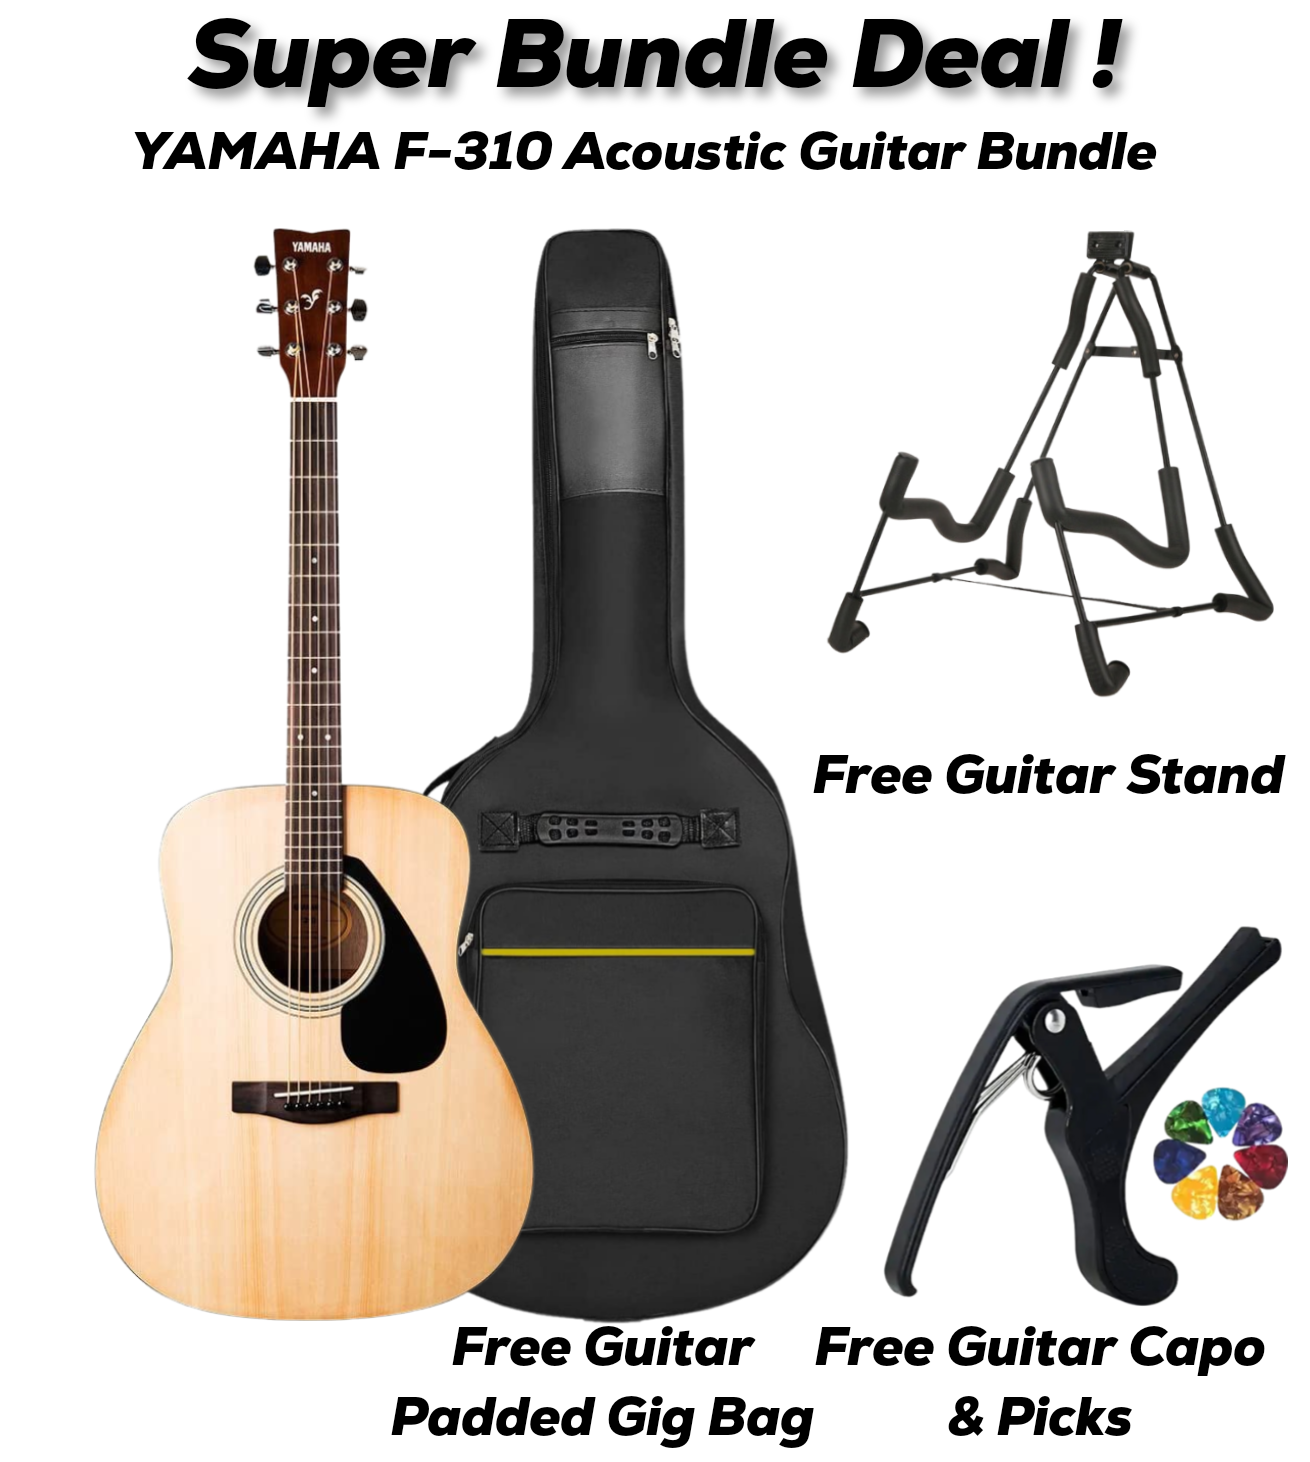 YAMAHA F-310 Acoustic Guitar Natural- Super Bundle Deal !